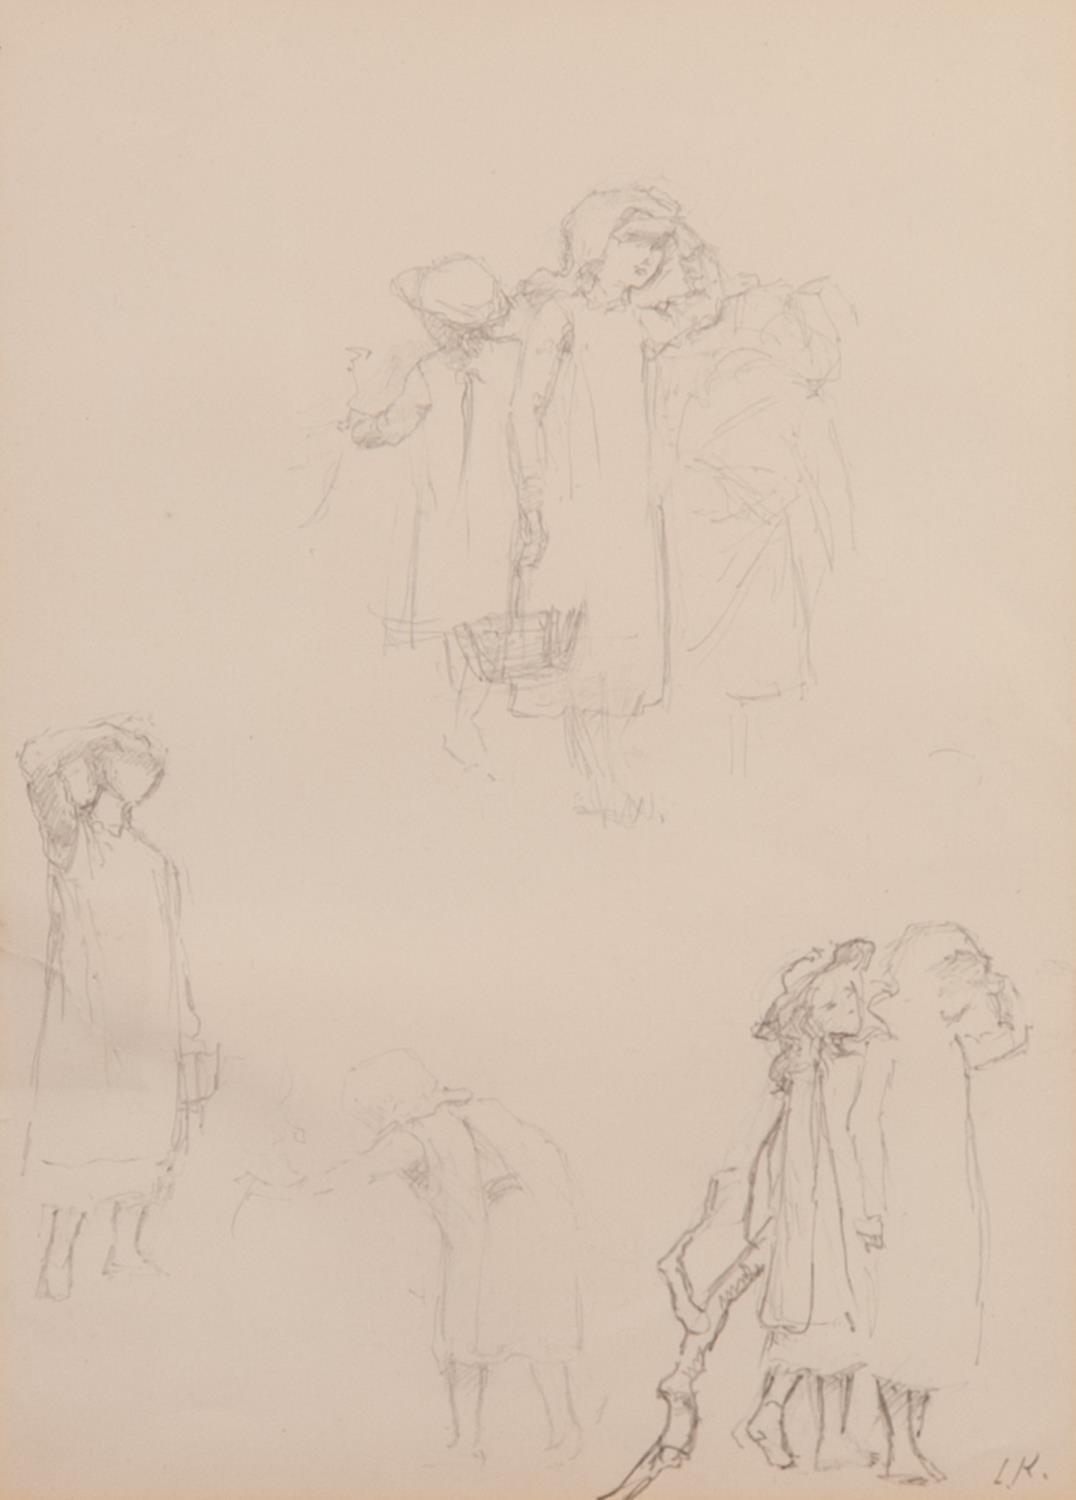 L.K. (TWENTIETH CENTURY) SET OF FOR PENCIL SKETCHES Figure studies of women and children - Image 2 of 4